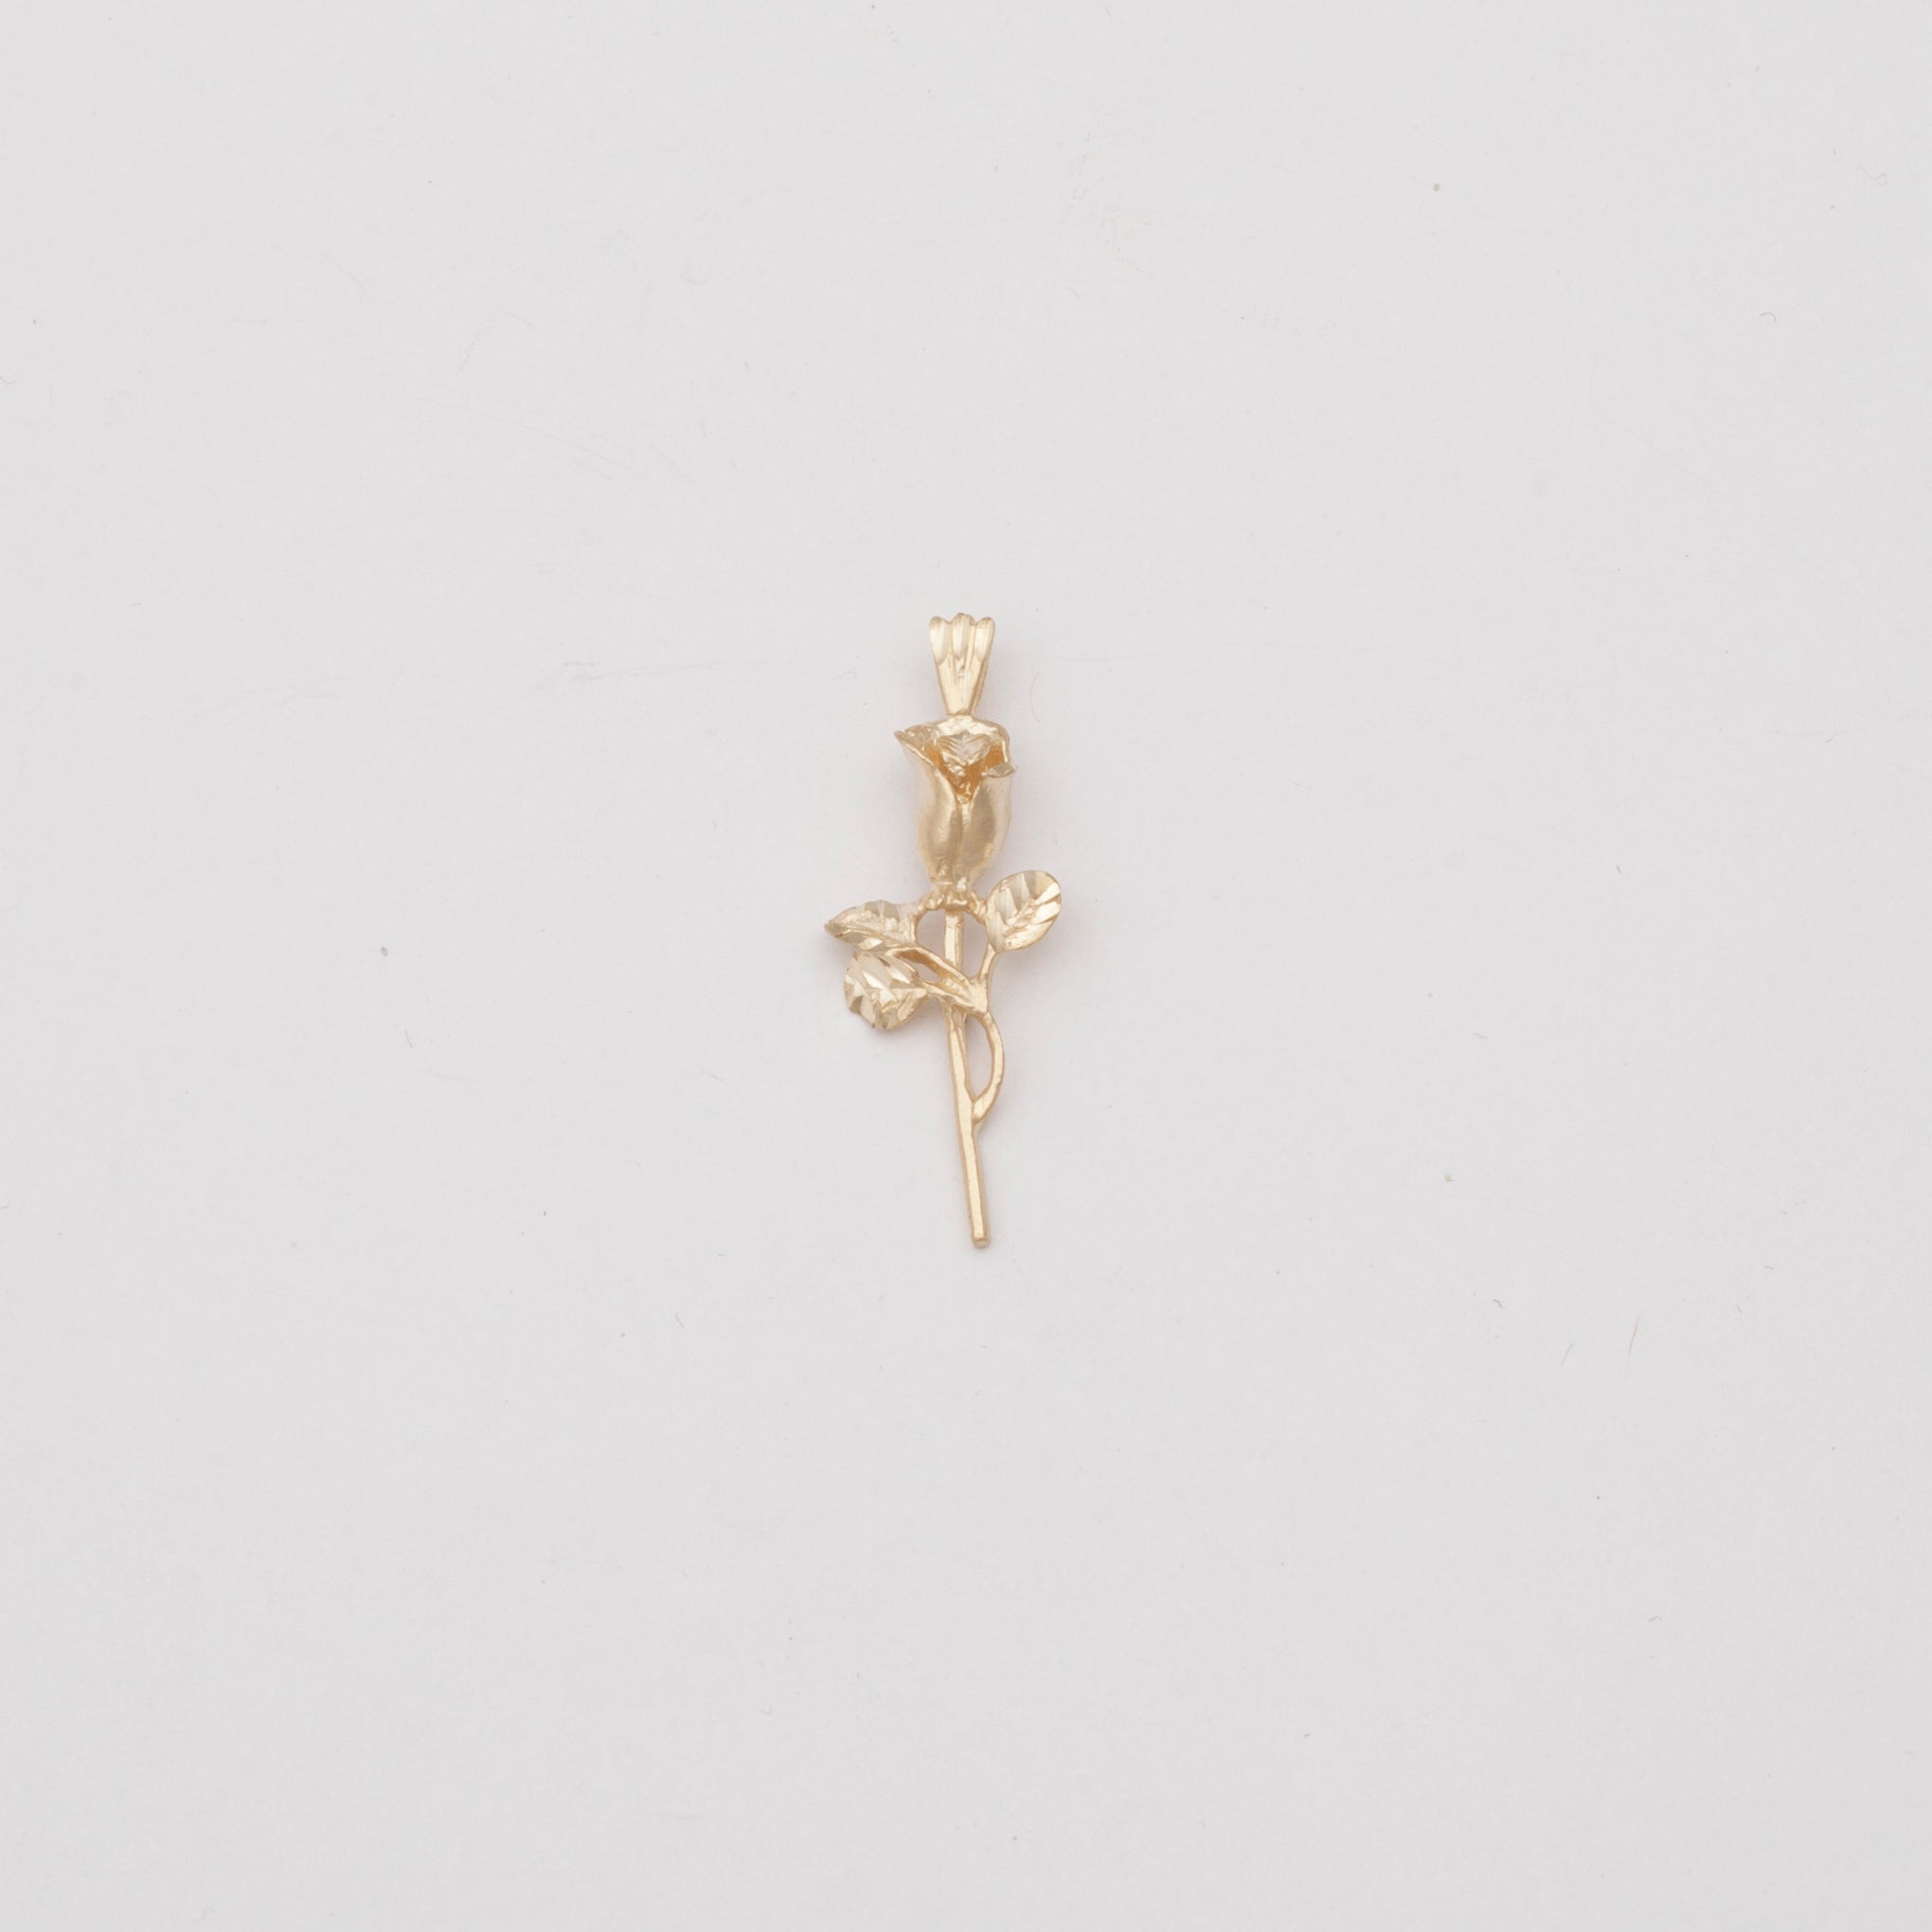 Rose pendant in gold